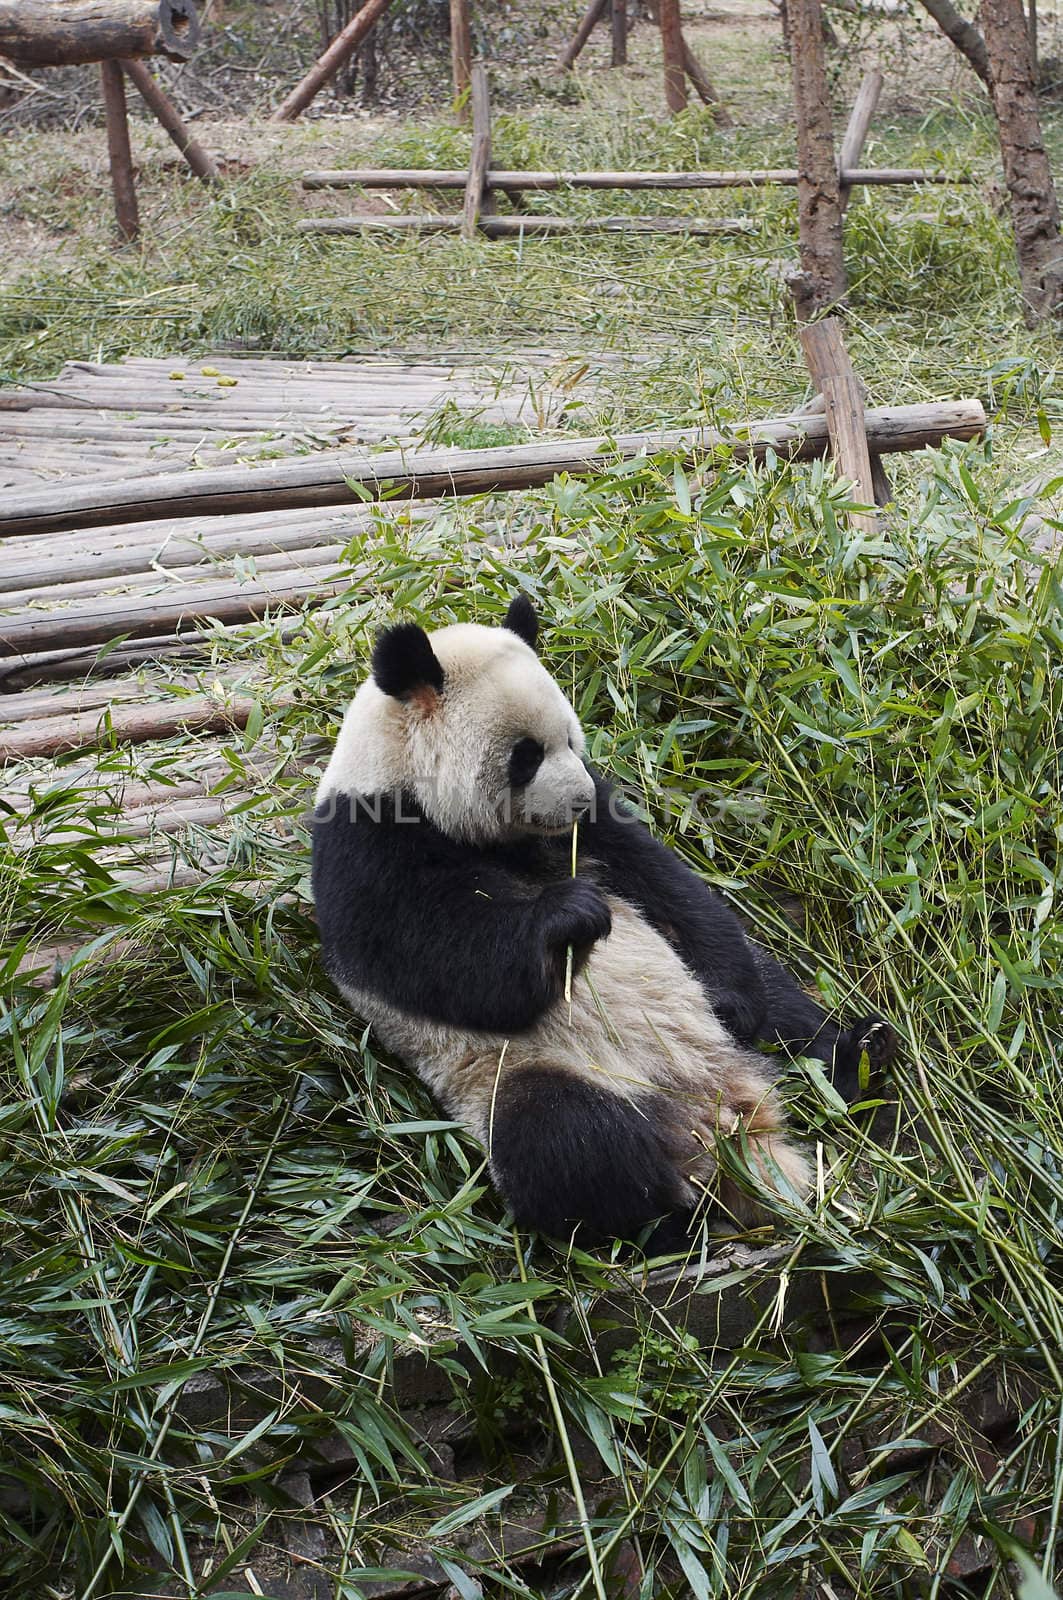 The giant panda bears eating fresh bamboo